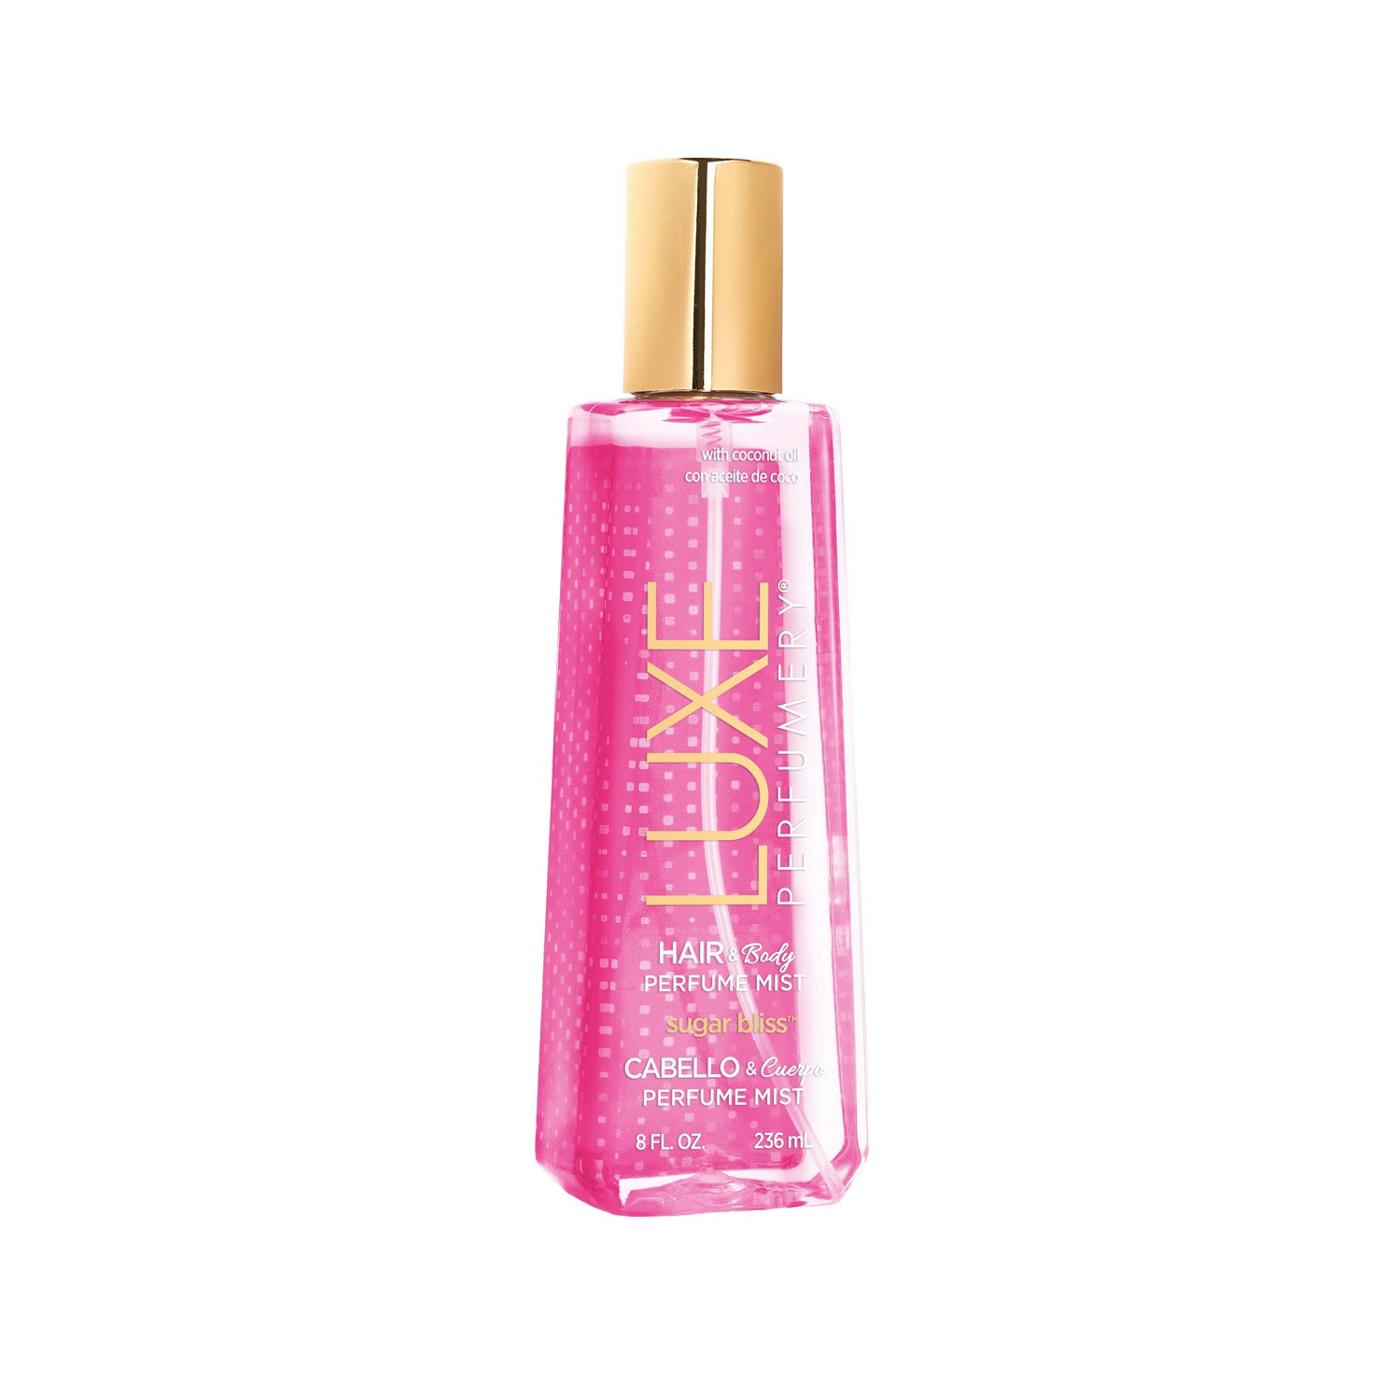 Luxe Perfume Hair & Body Perfume Mist - Sugar Bliss; image 3 of 3